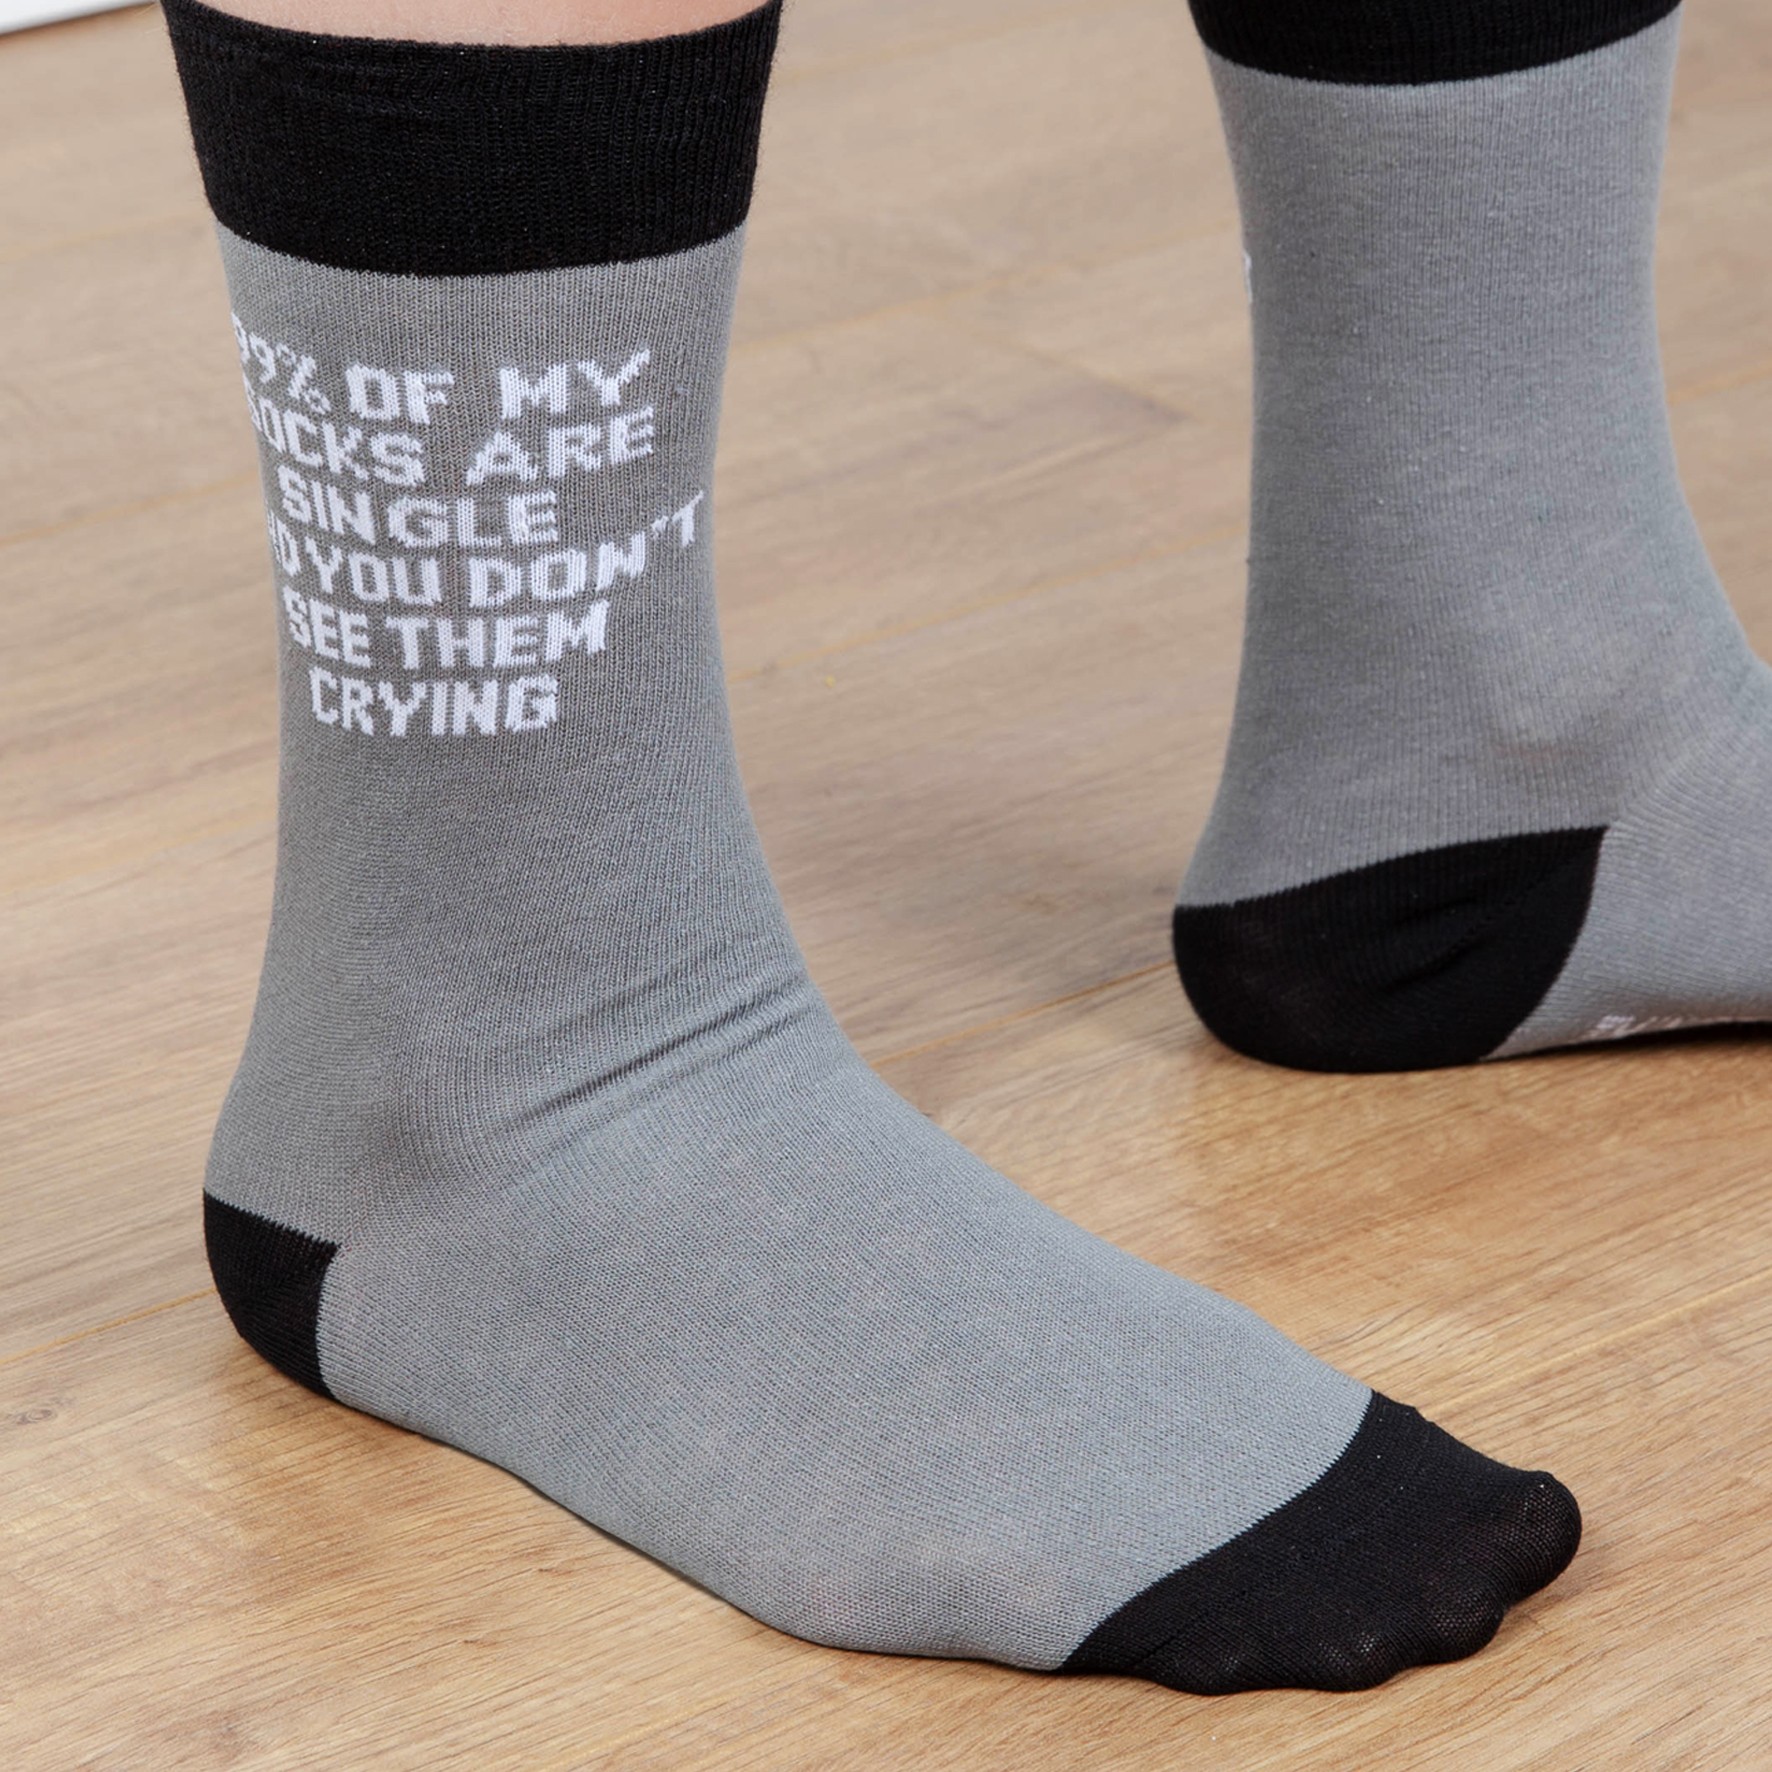 Sokid "99% minu sokkidest ..." HM1900